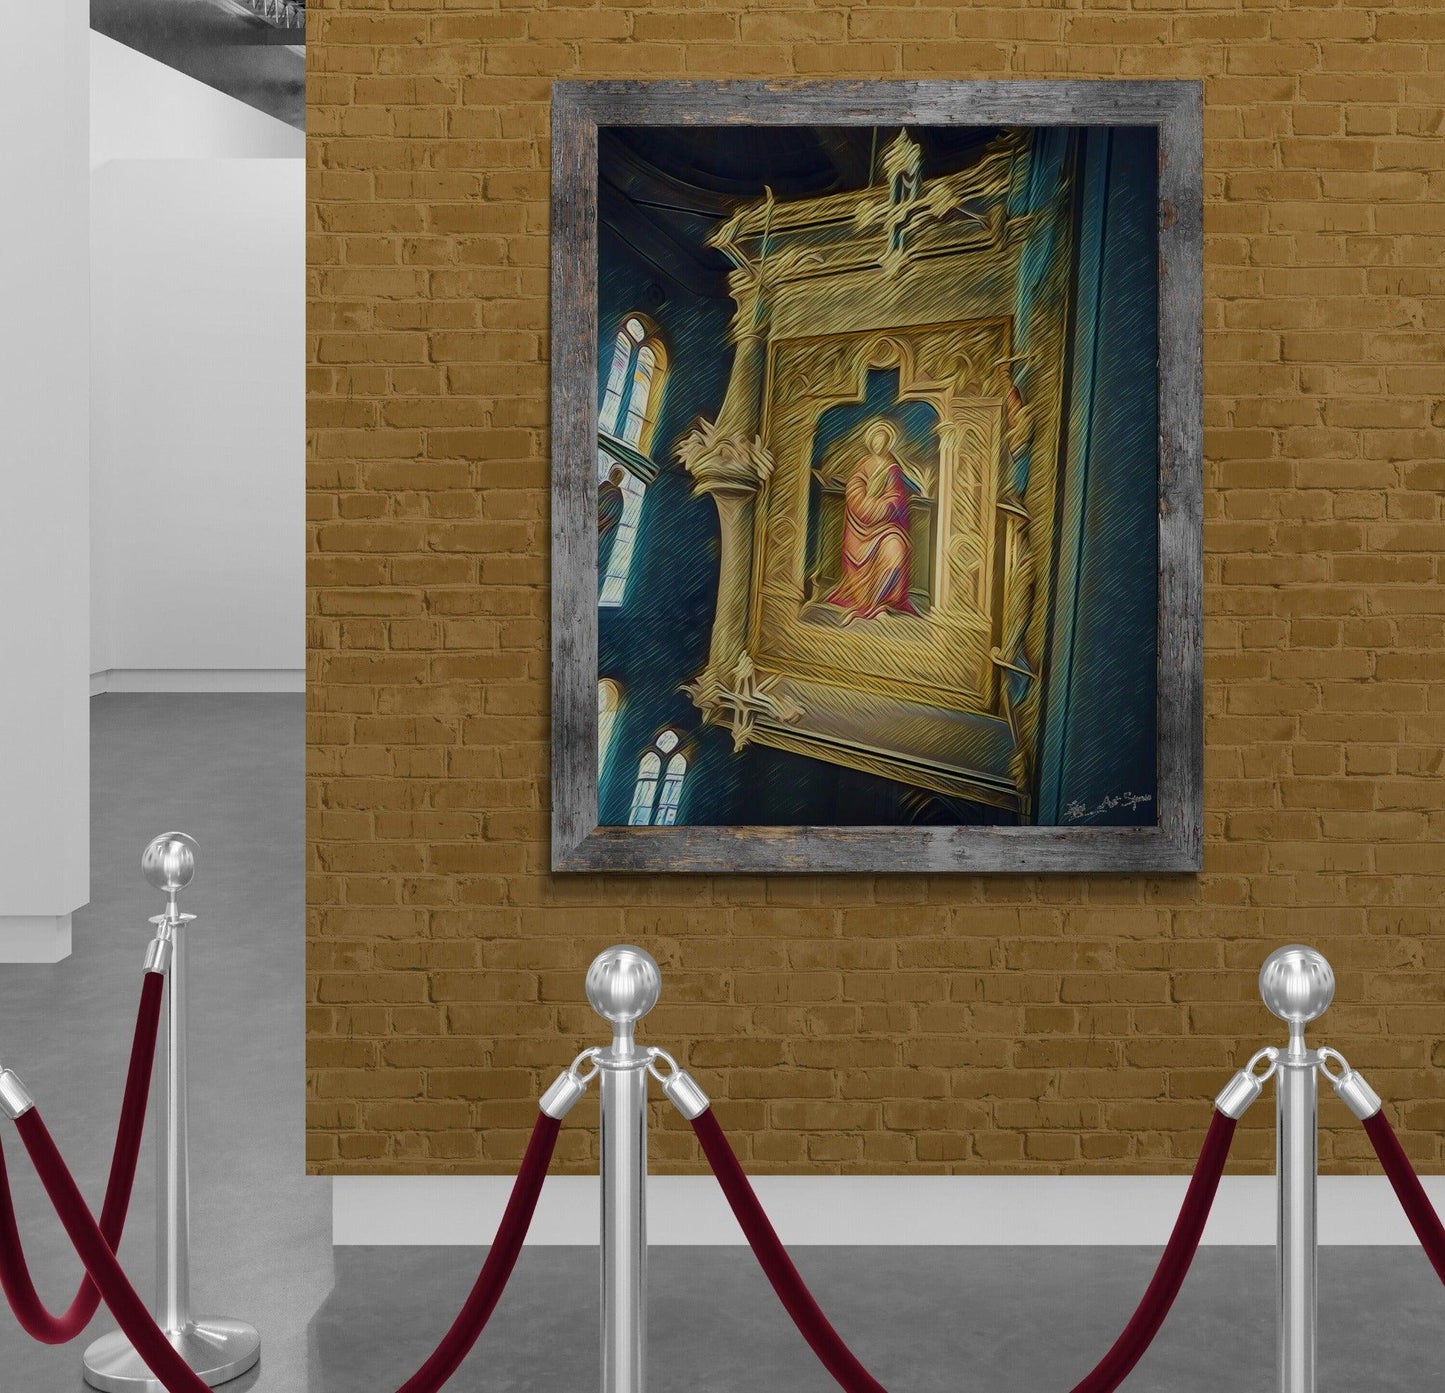 Luigi_ArtSquare - Art_exhibition_wall